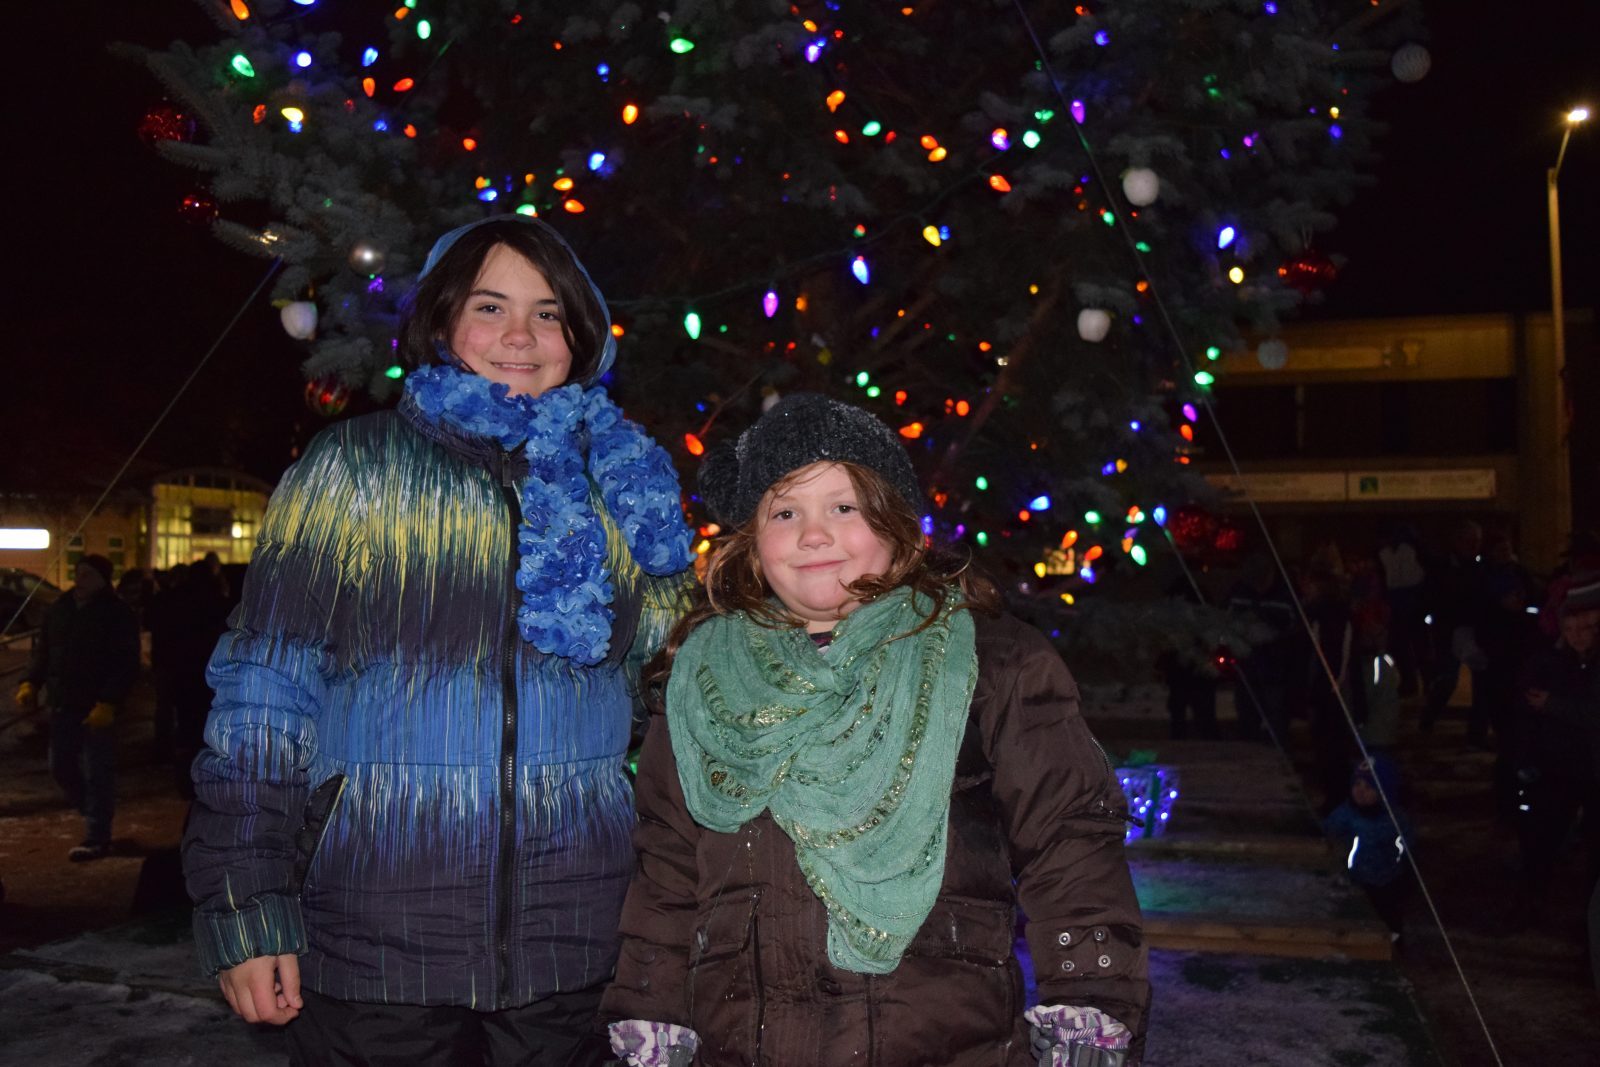 WEEKEND EVENT: Community Christmas Tree Lighting